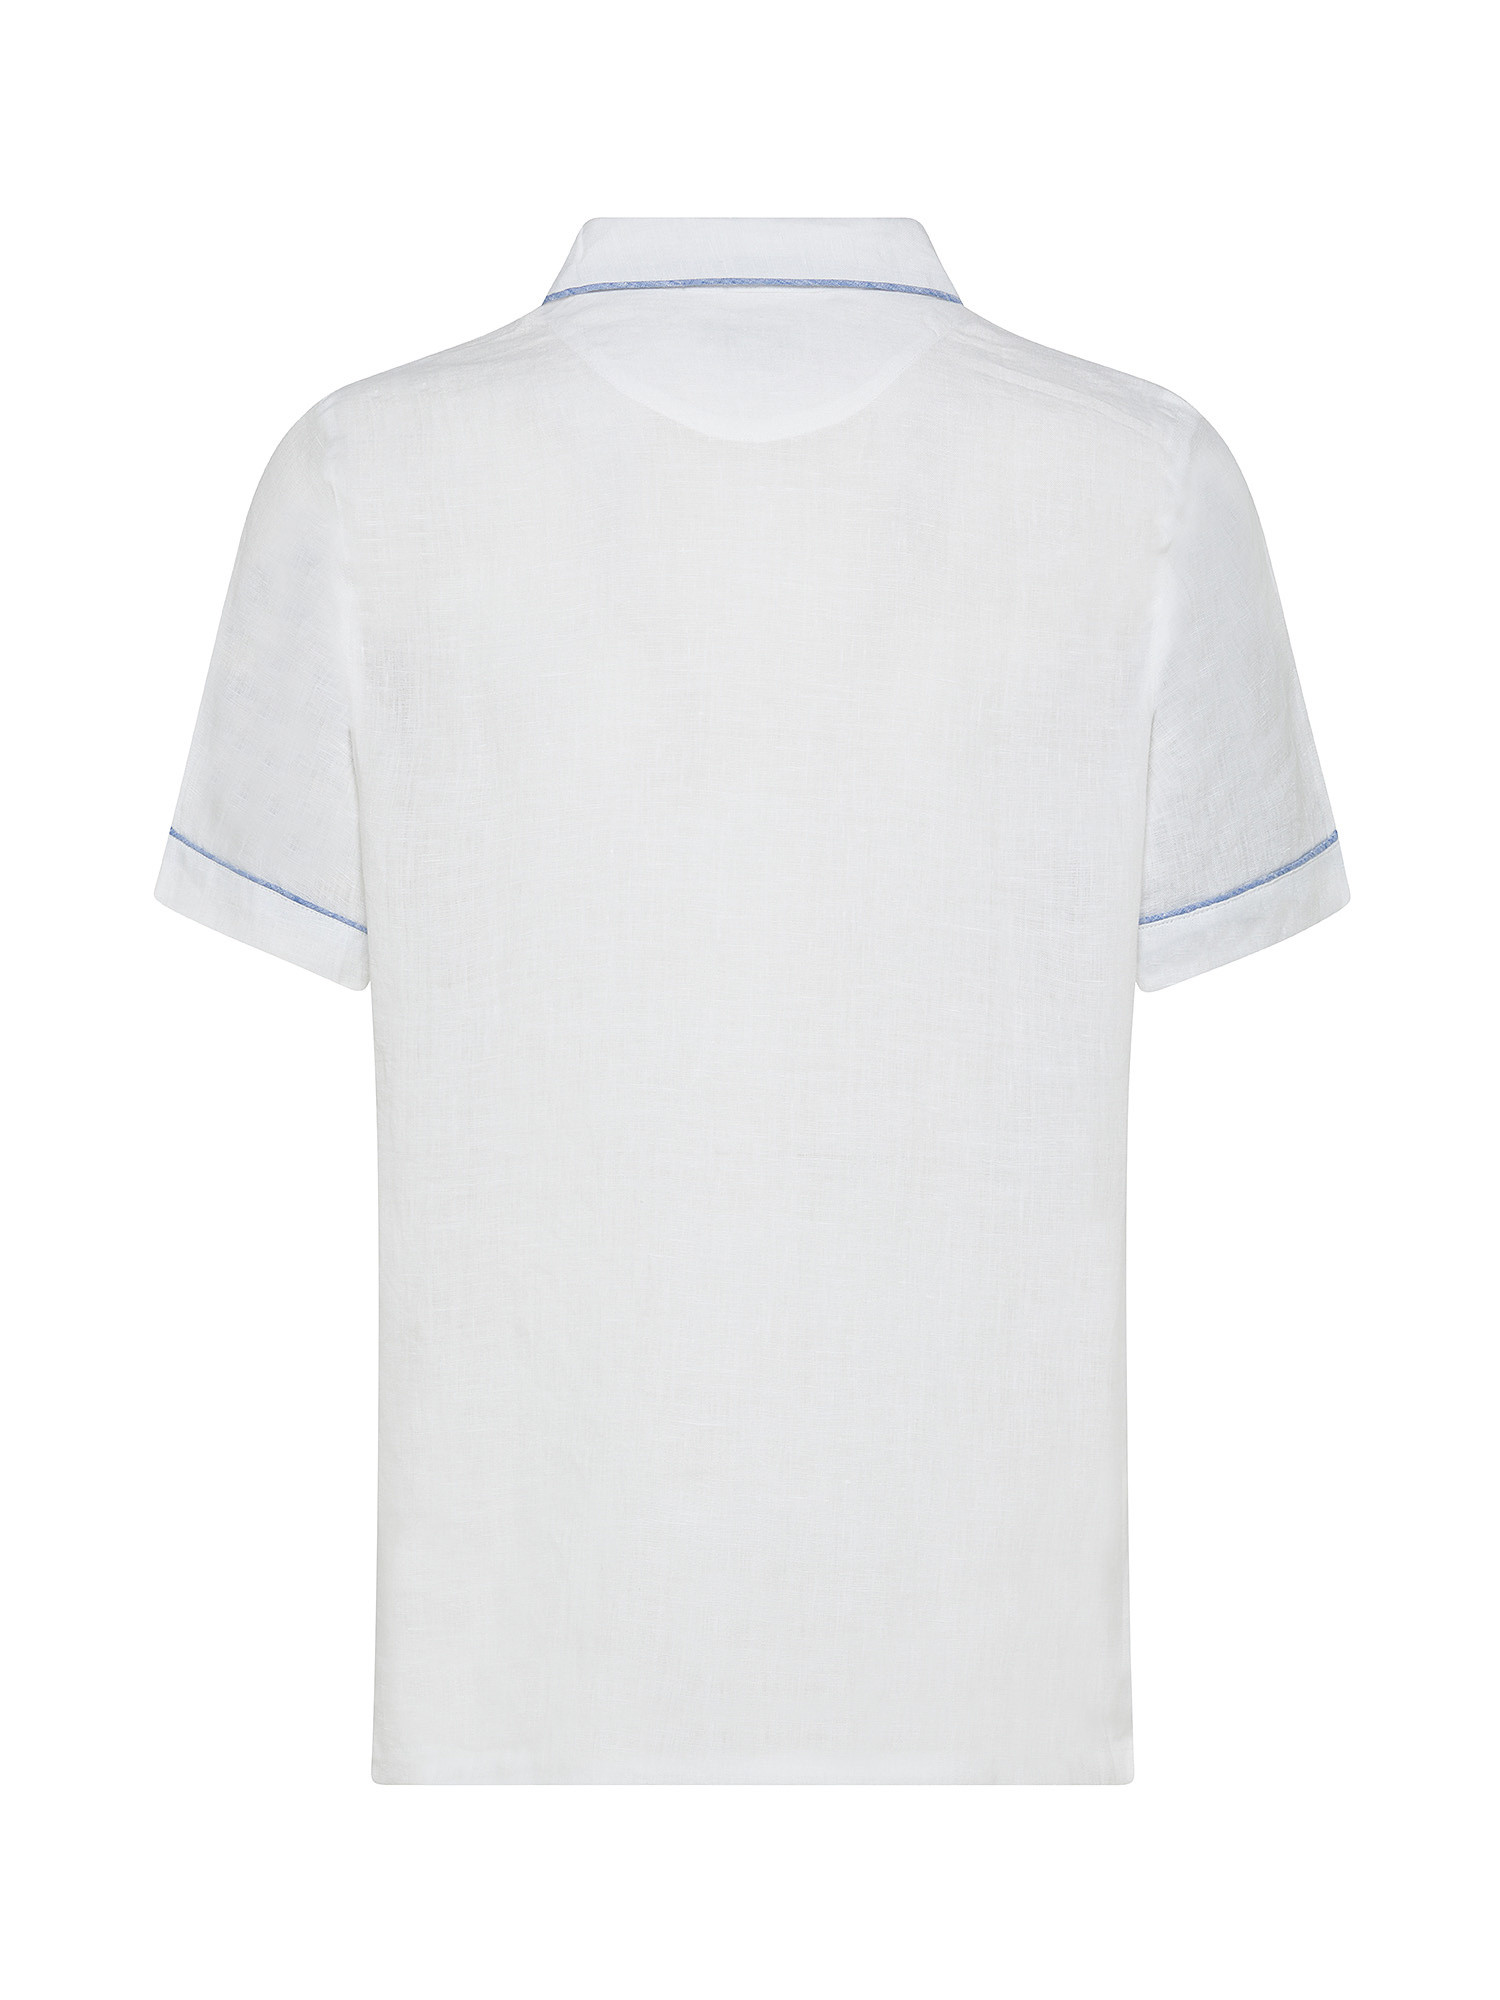 Giacca pigiama puro lino tinta unita, Bianco, large image number 1